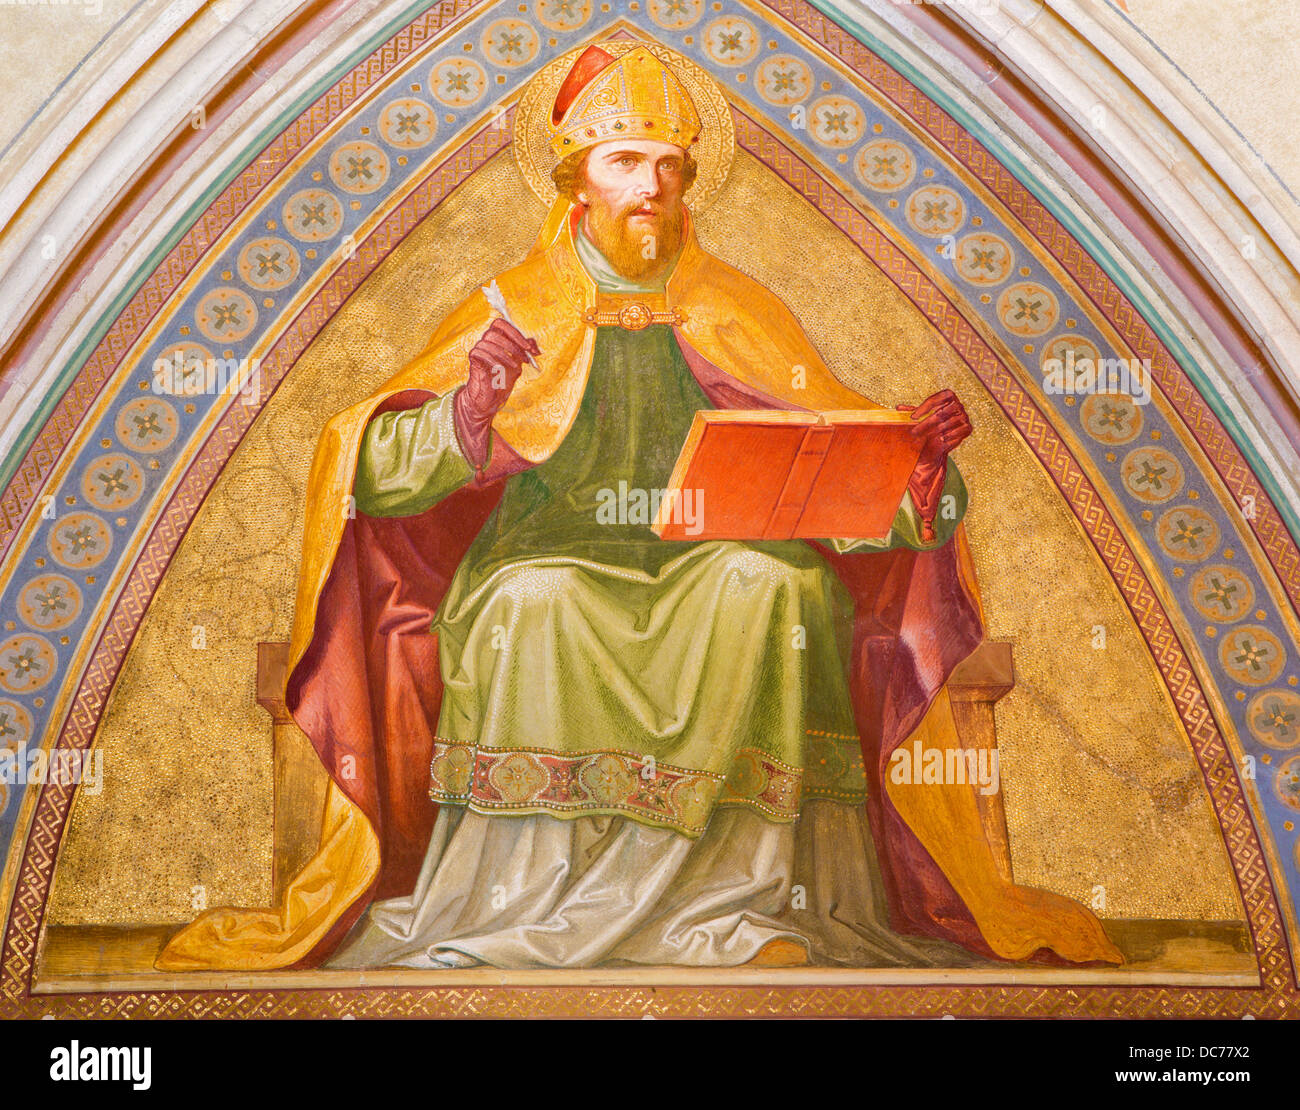 Viena - 27 de julio: Fresco de San Agustín desde el atrio de la iglesia de monasterio de Klosterneuburg Foto de stock